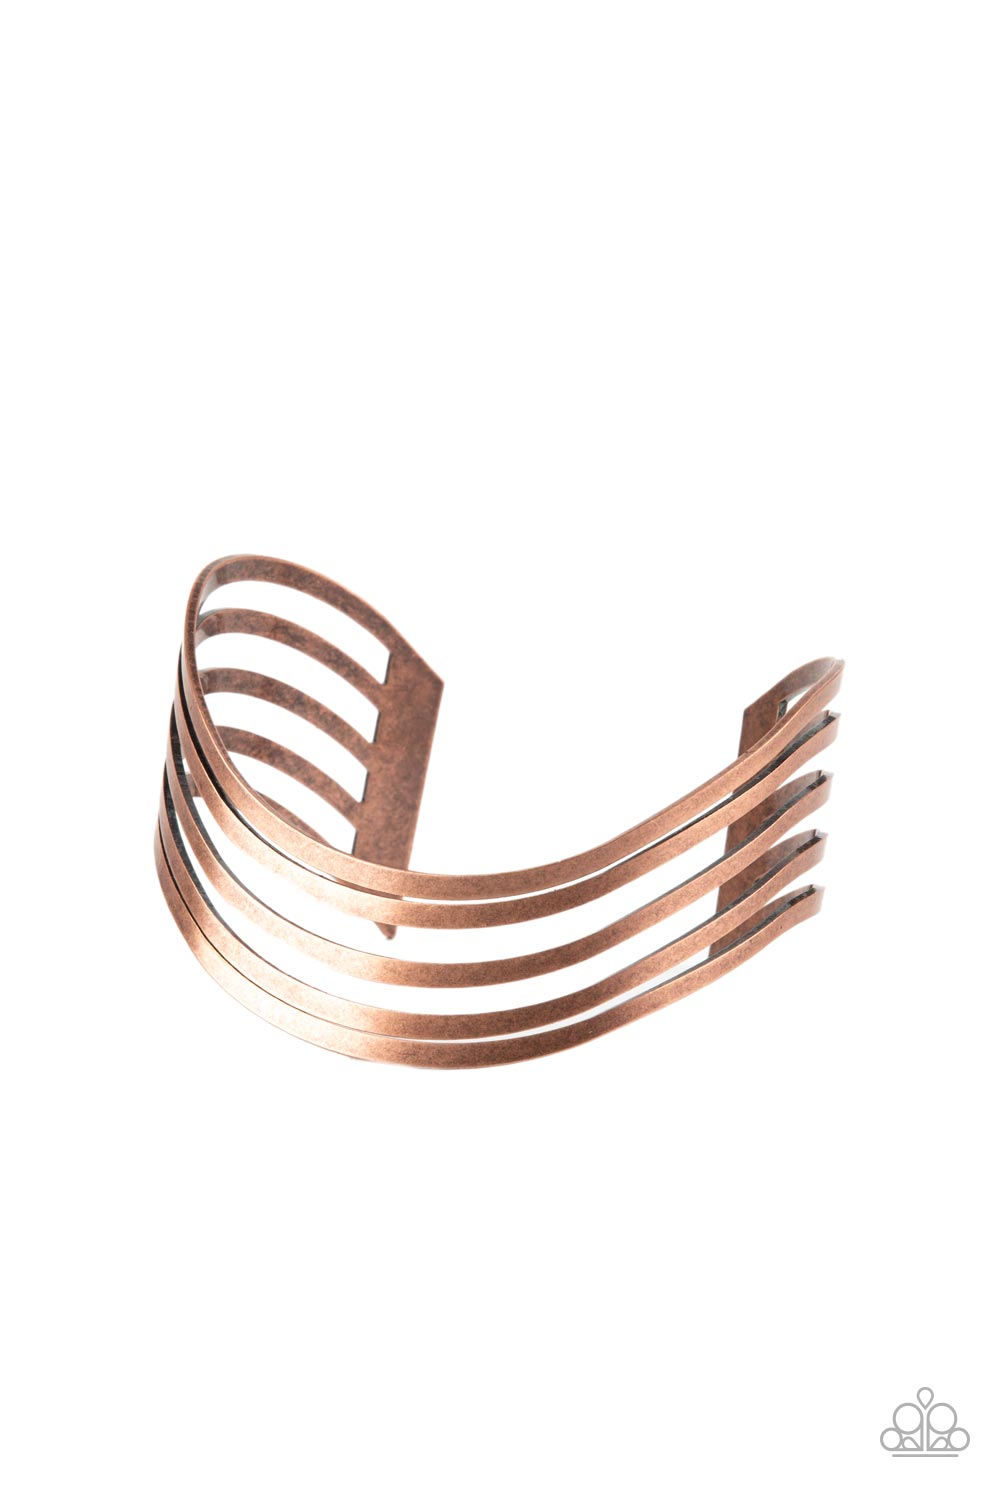 Paparazzi Bracelets - Tantalizingly Tiered - Copper